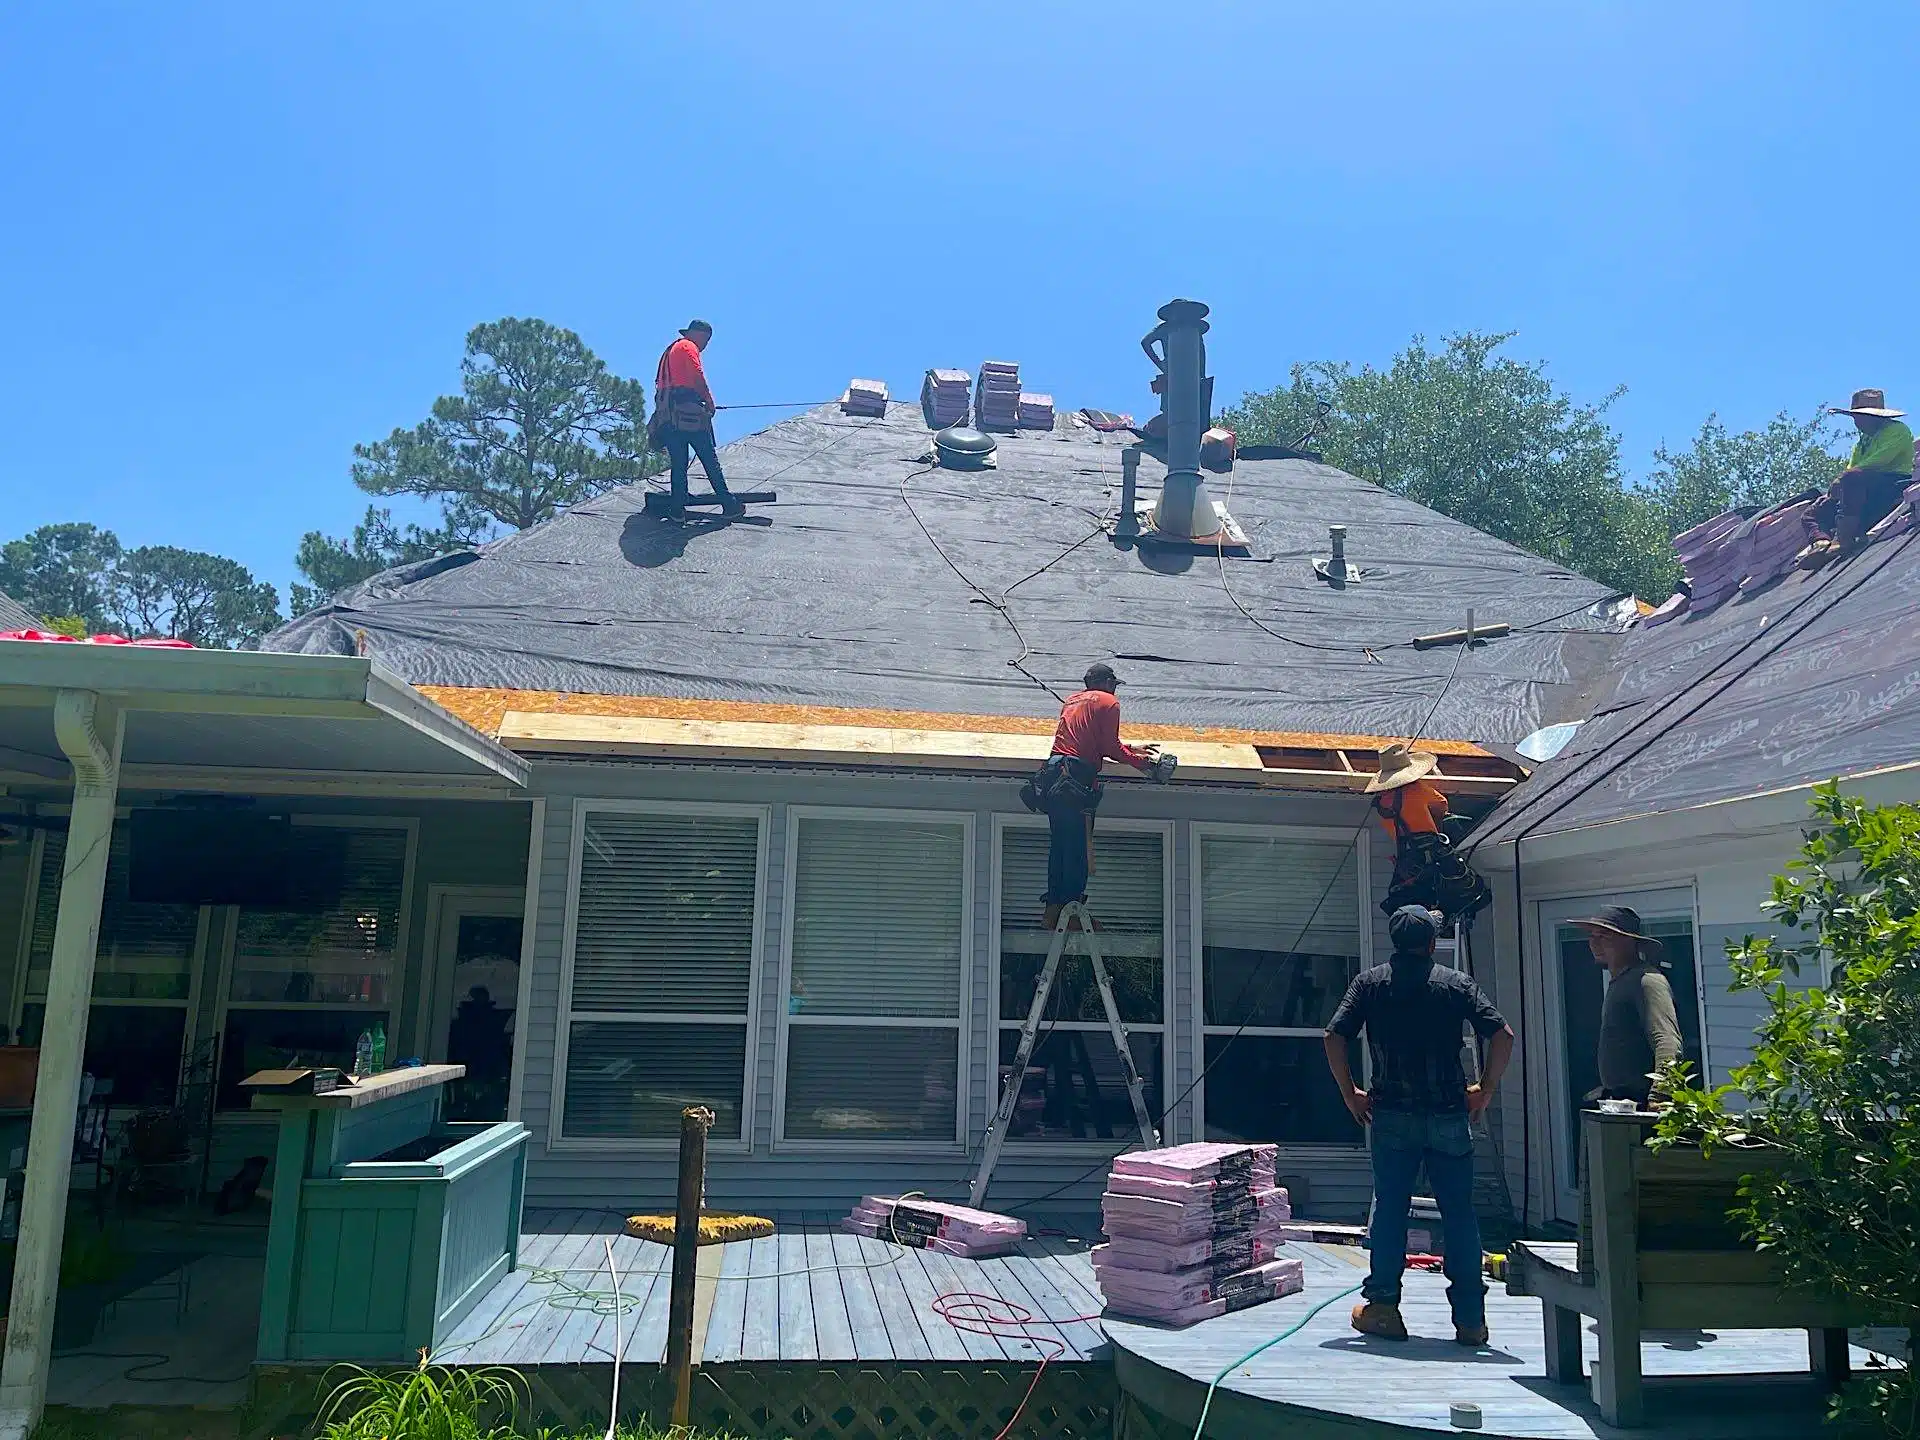 roofing contractors repairing a roof